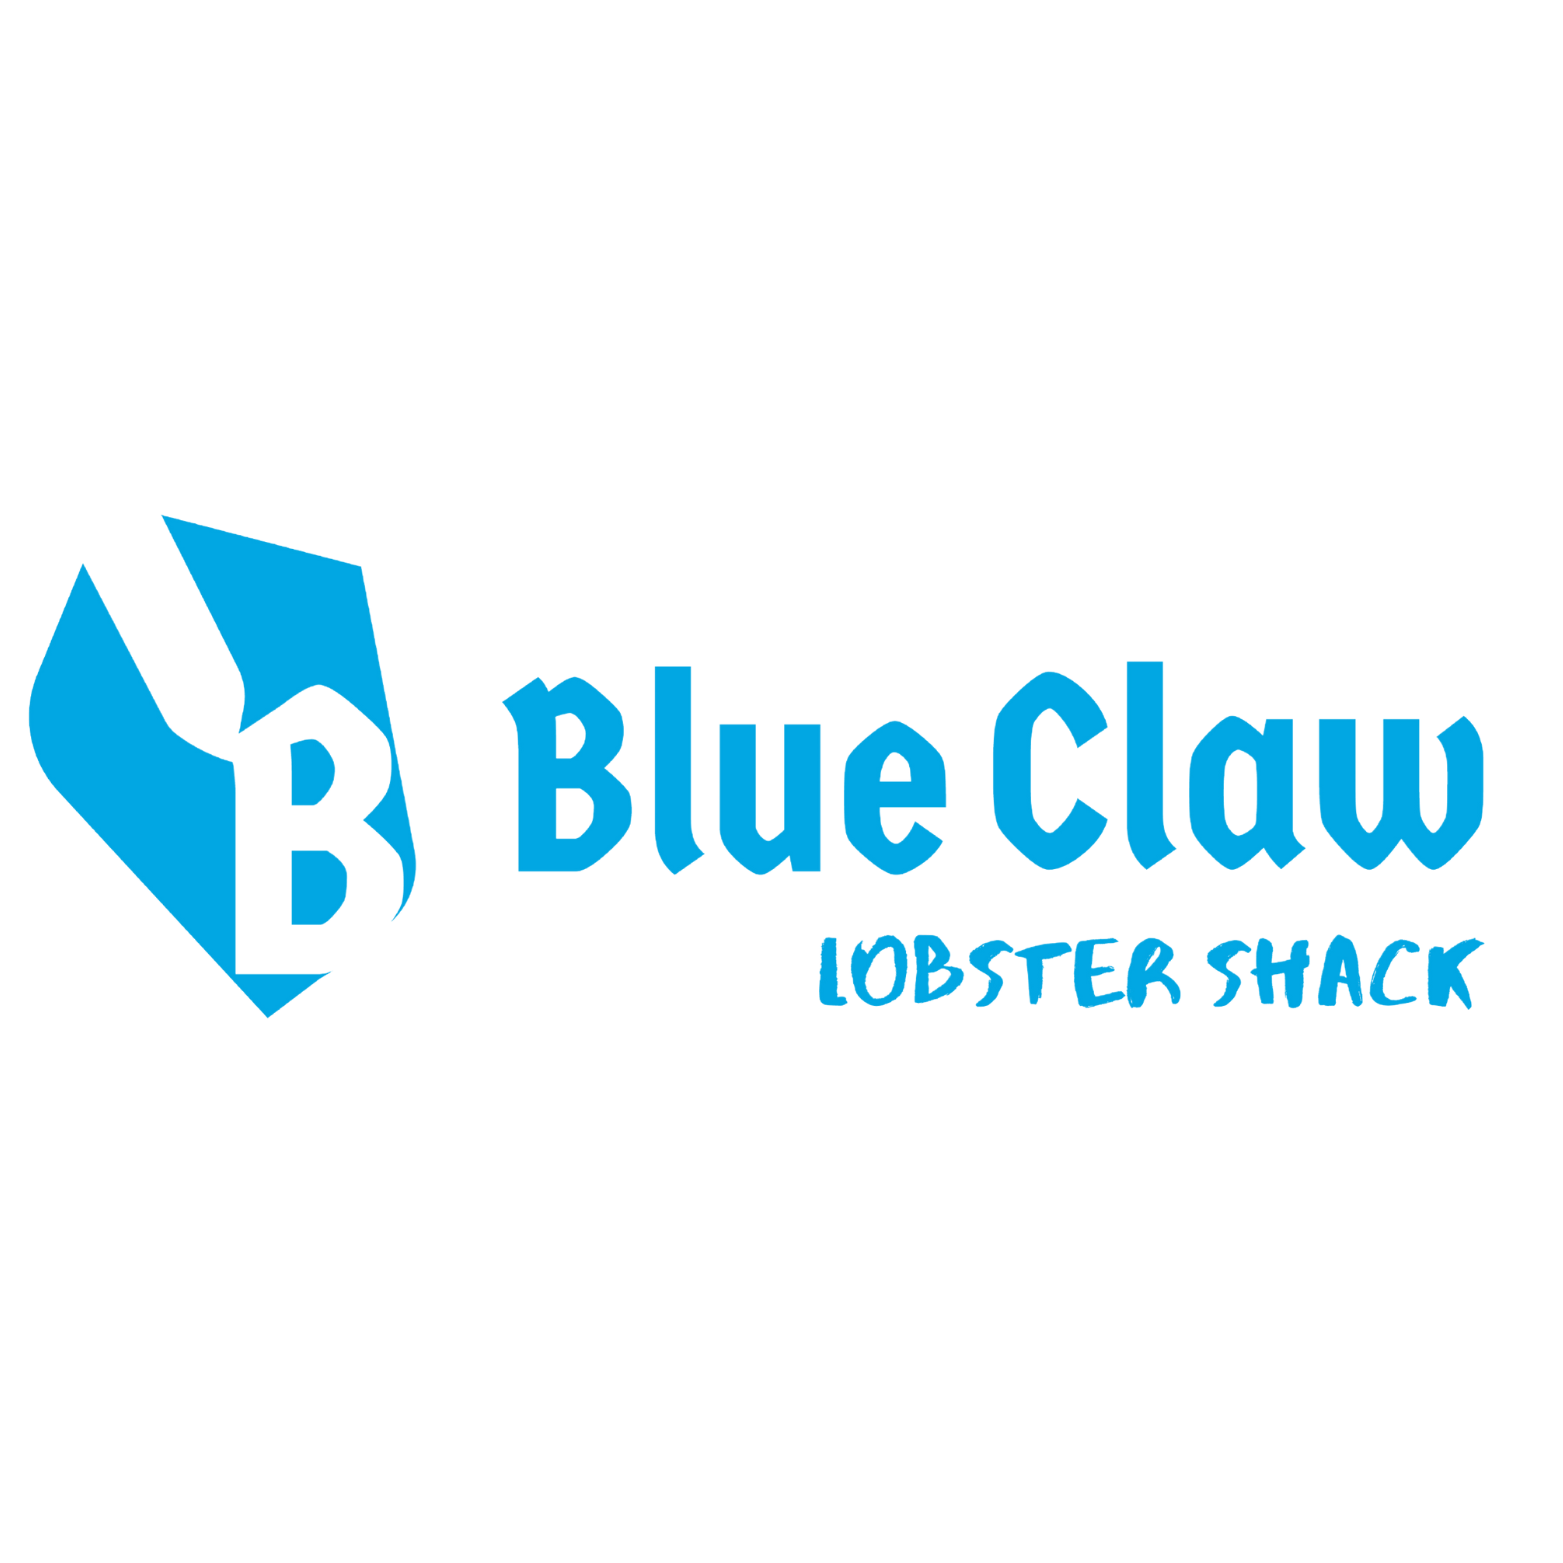 Sponsor: Blue Claw Lobster Shack